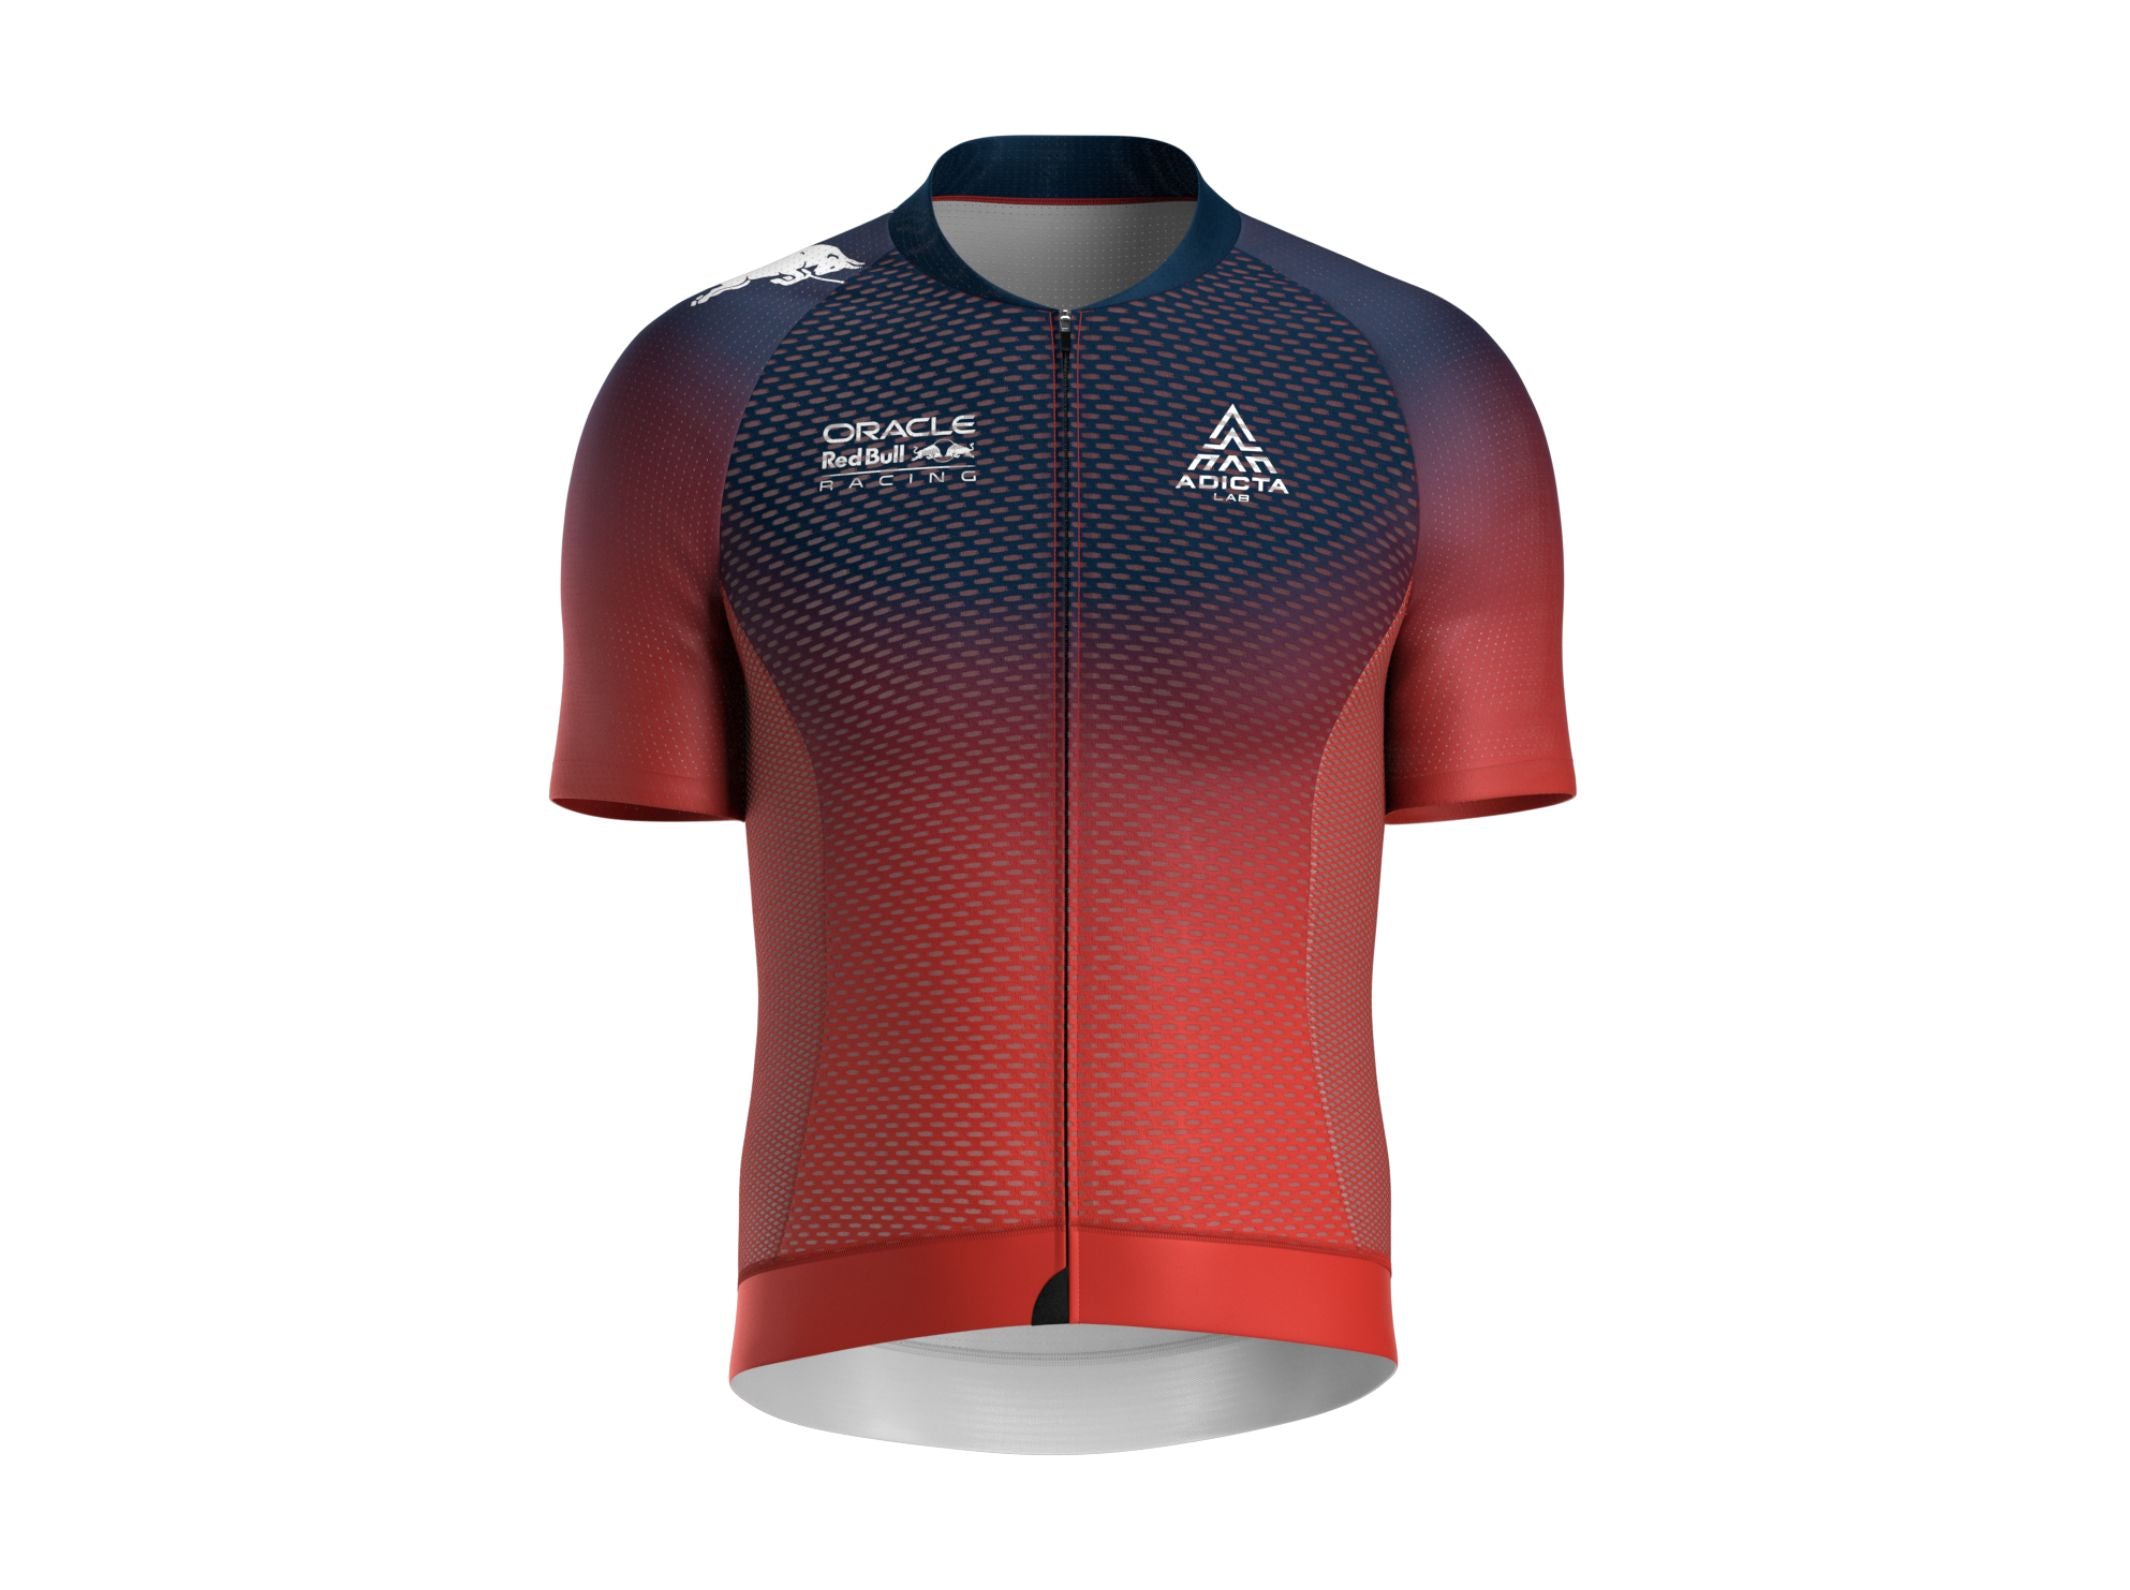 VALENT Jersey S/S | ADICTA LAB | apparel | Apparel, Apparel | Cycling Jerseys